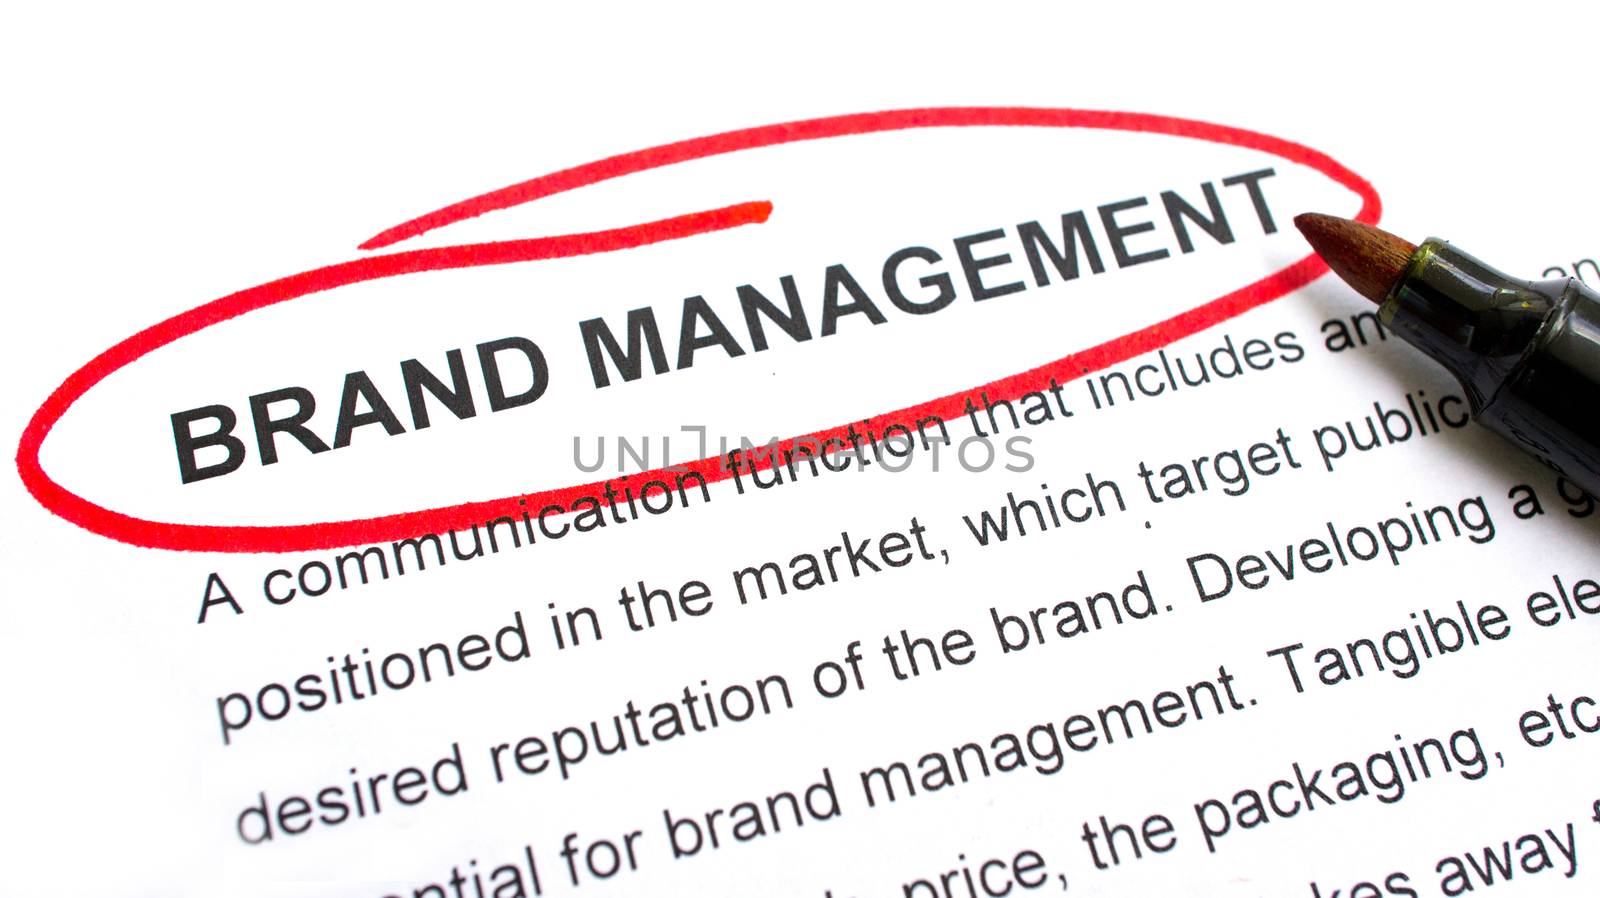 Brand Management by kbuntu